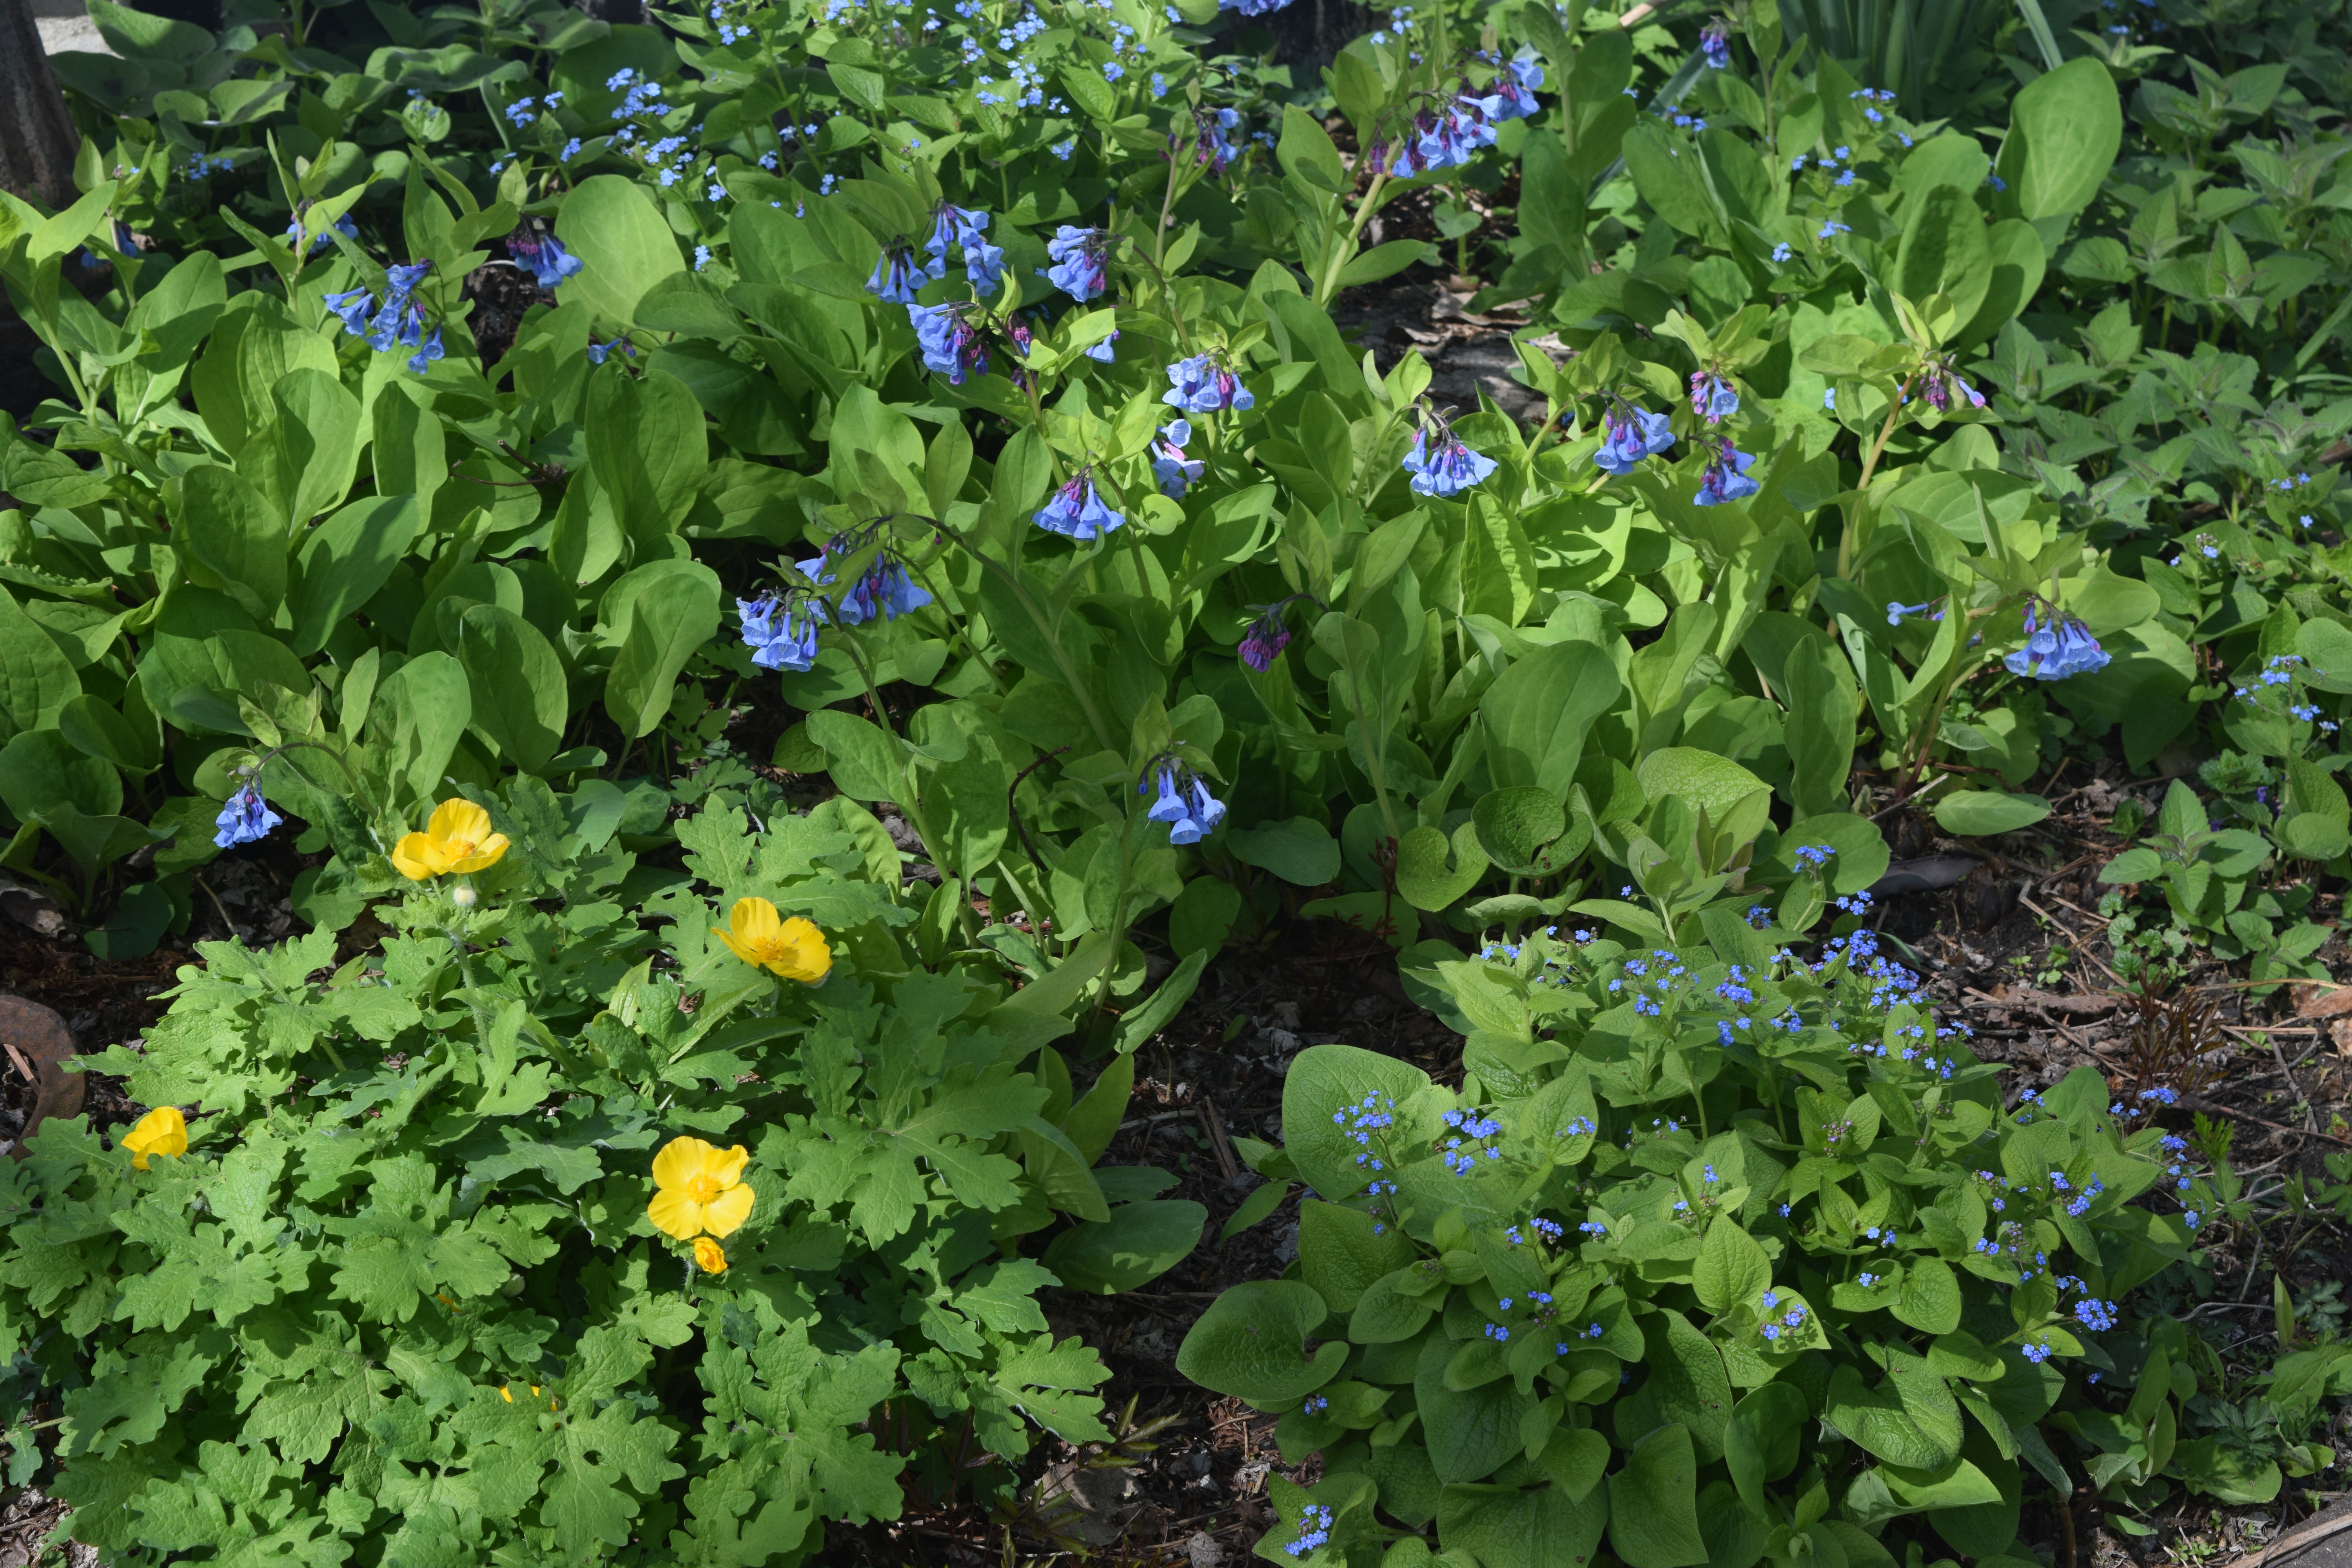 How To Grow Virginia Bluebells: Planting Virginia Bluebells In